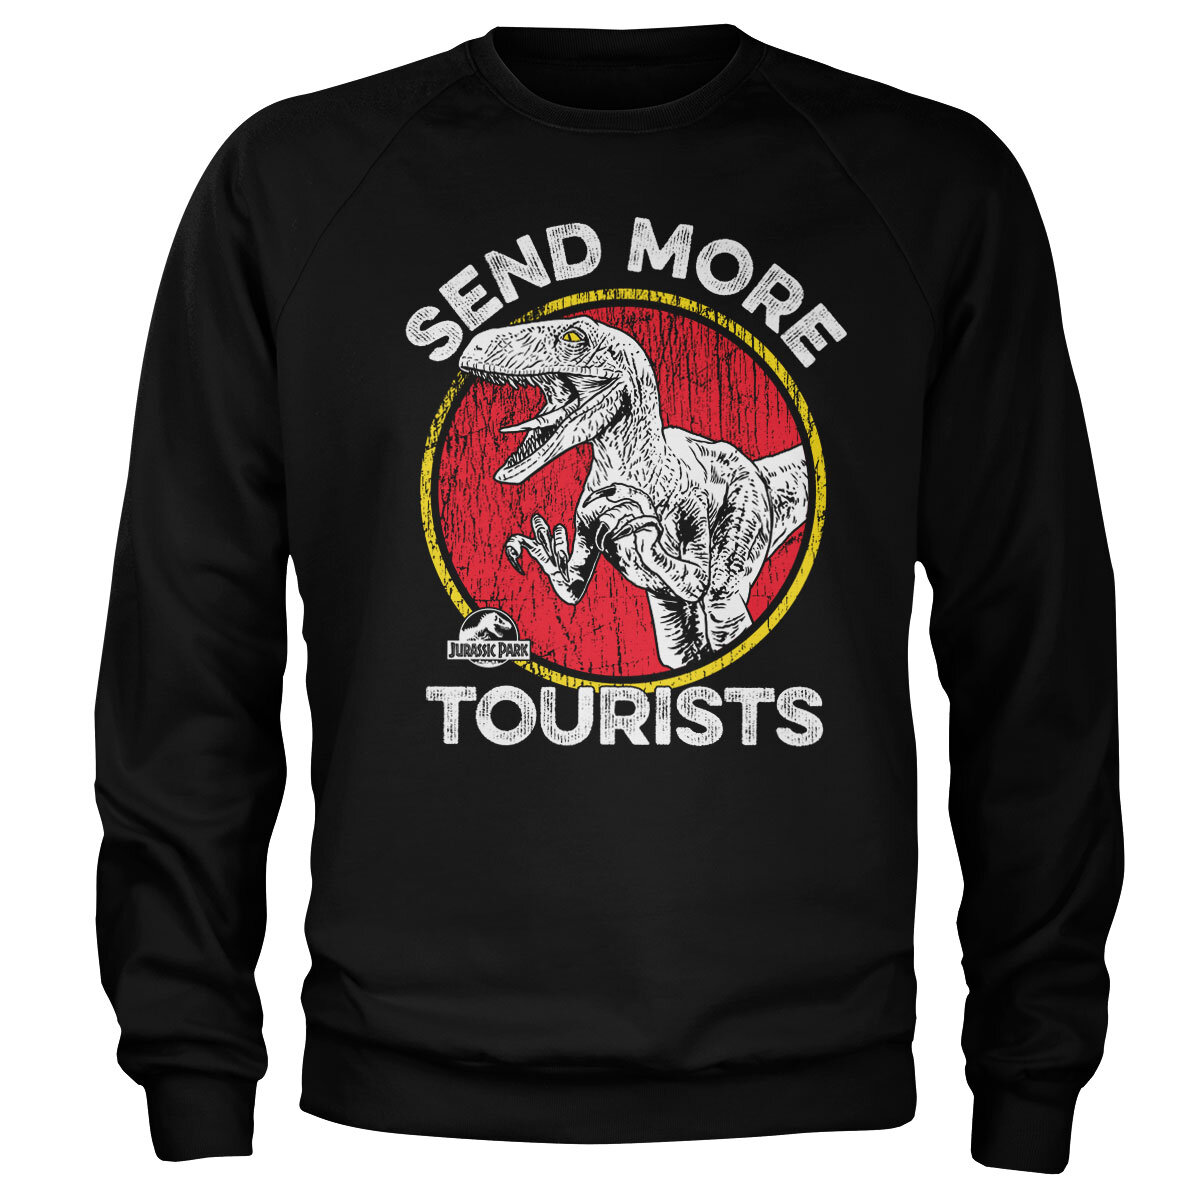 Jurassic Park - Send More Tourists Sweatshirt